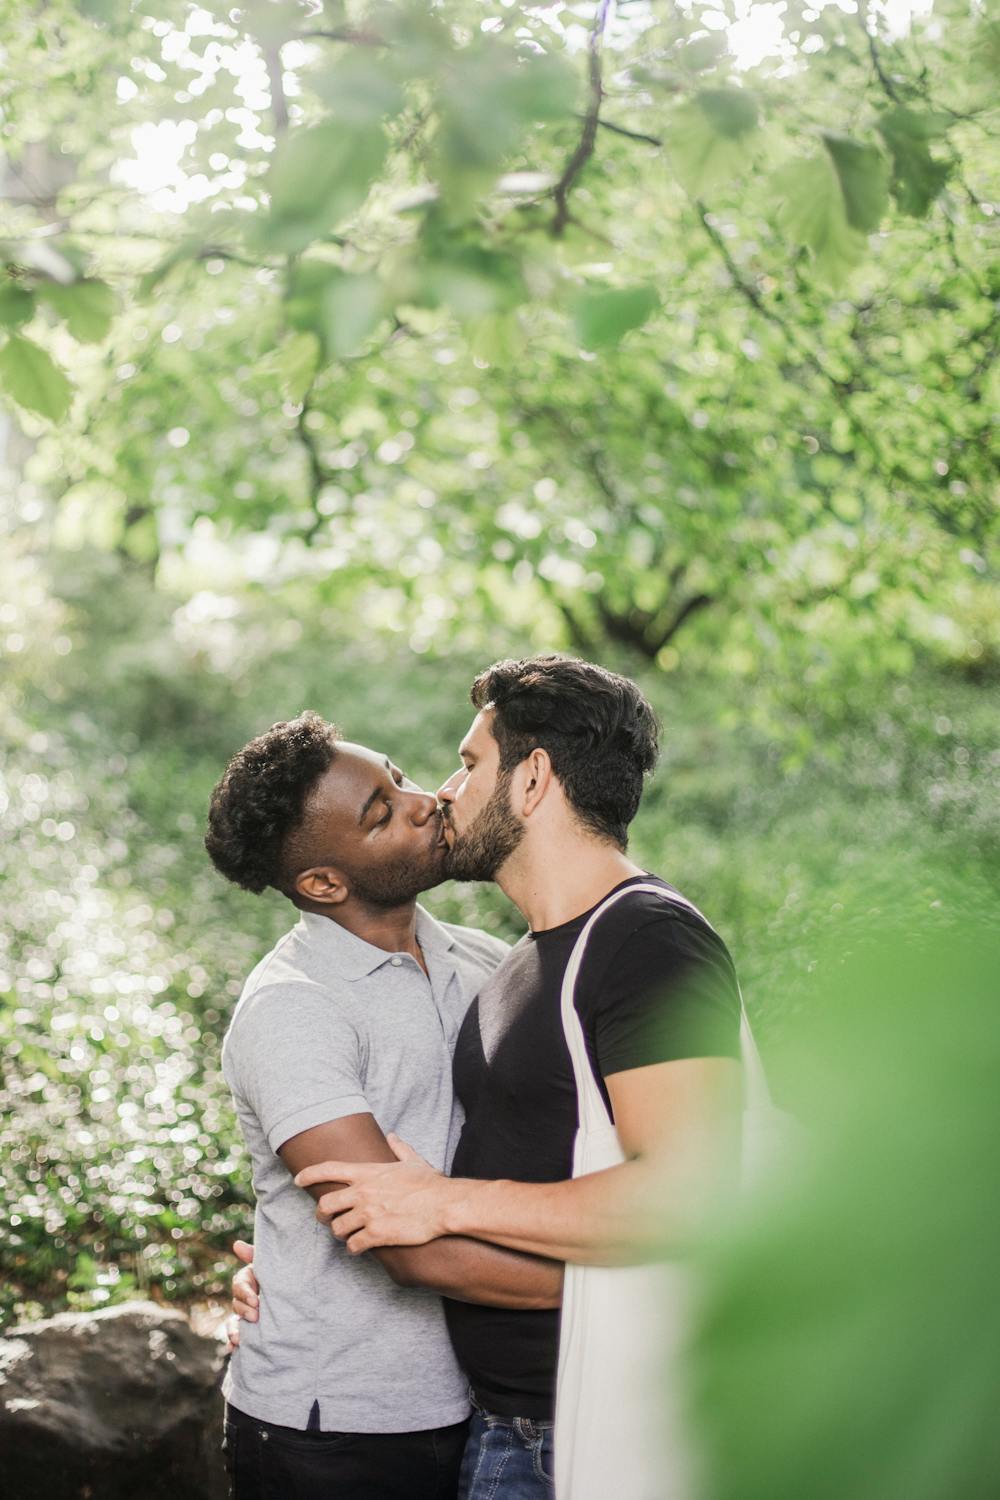 Two Men Kissing Outside · Free Stock Photo